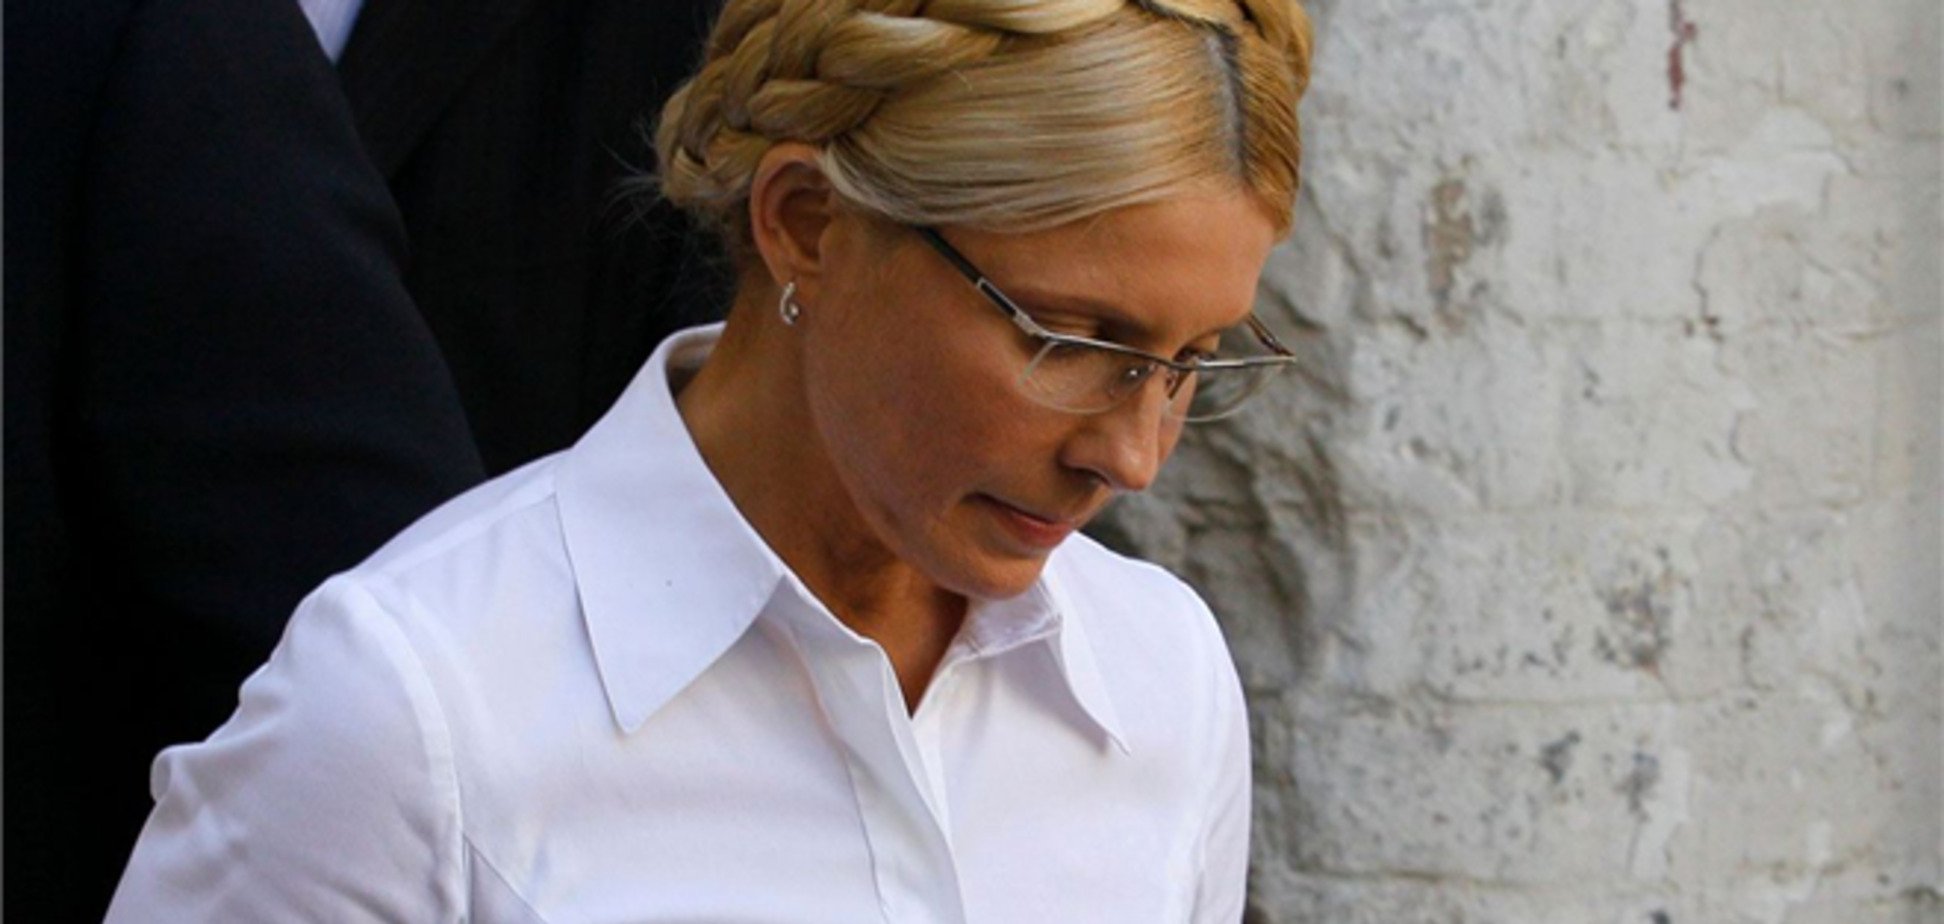 Лечение Тимошенко за границей запрещено законом - юрист